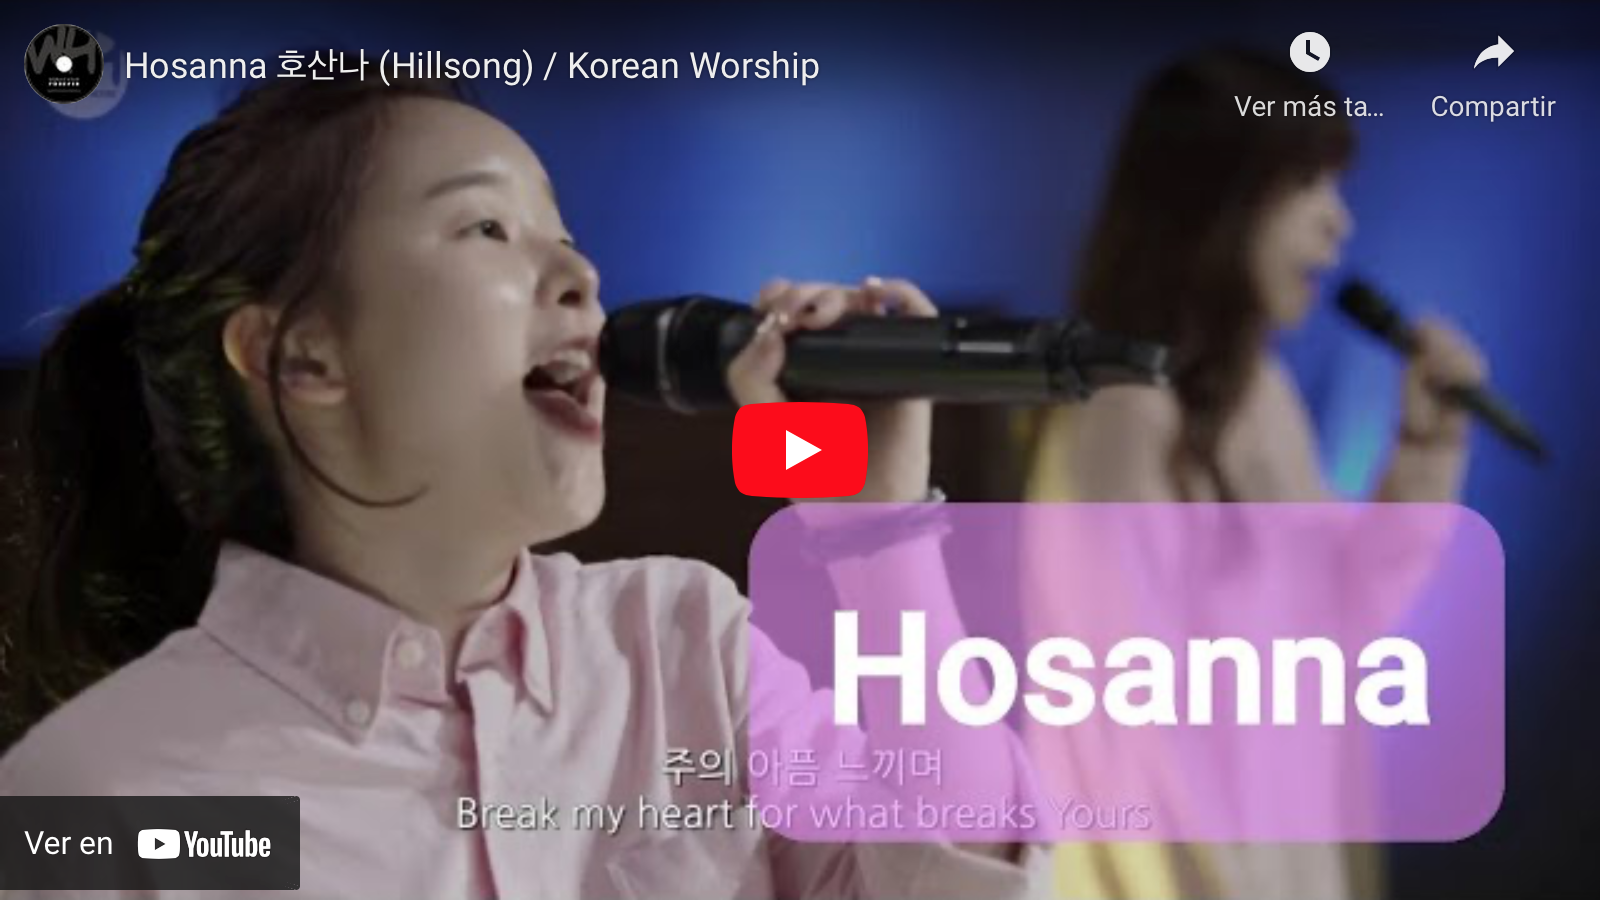 Hosanna en coreano